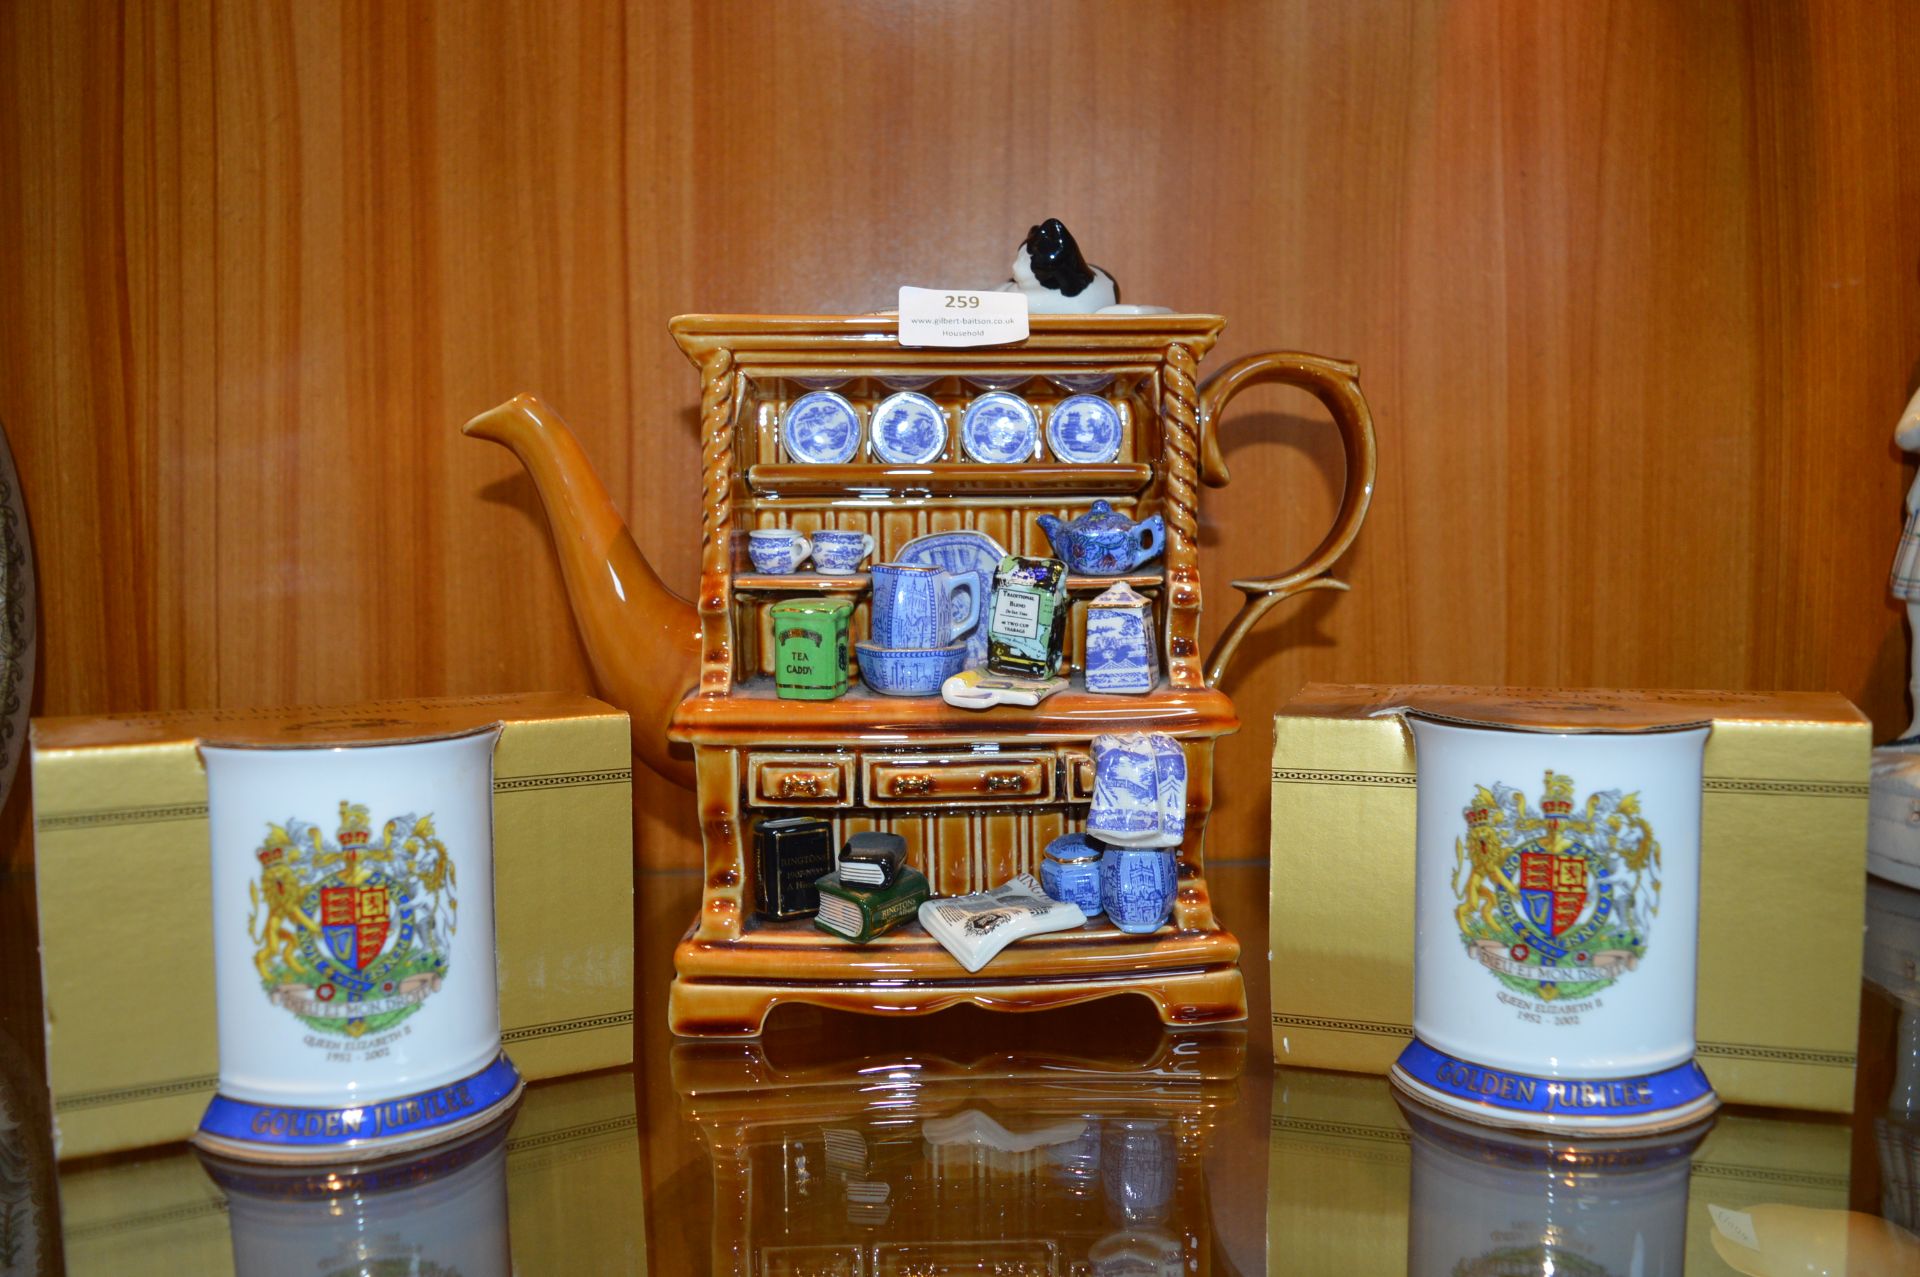 Ringtons Novelty Teapot plus Mugs